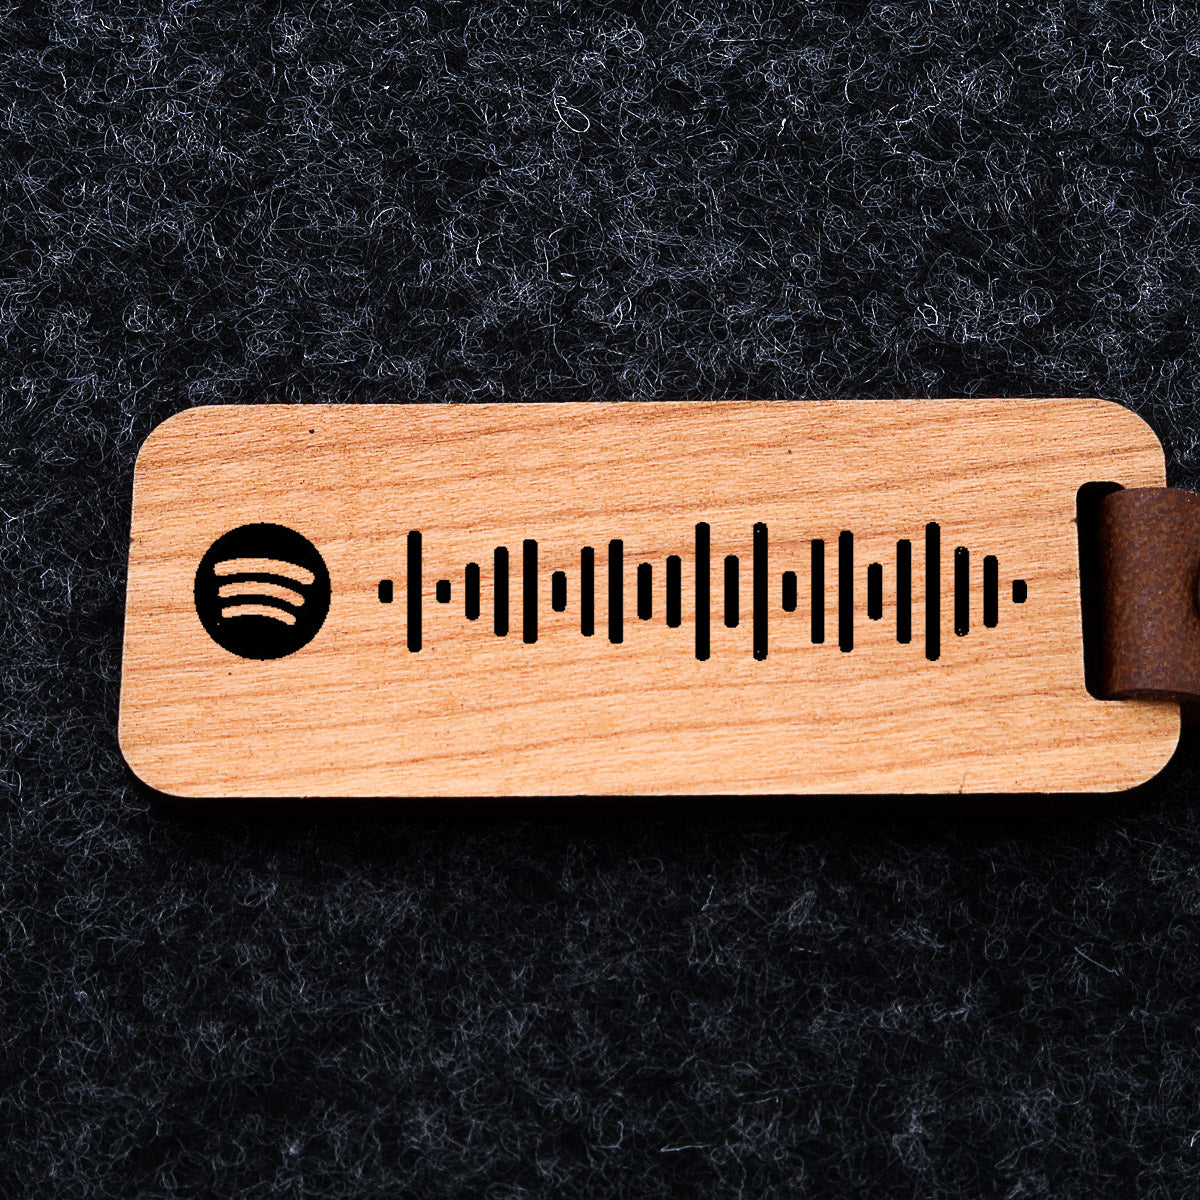 Spotify nyckelring i trä med Spotify-kod